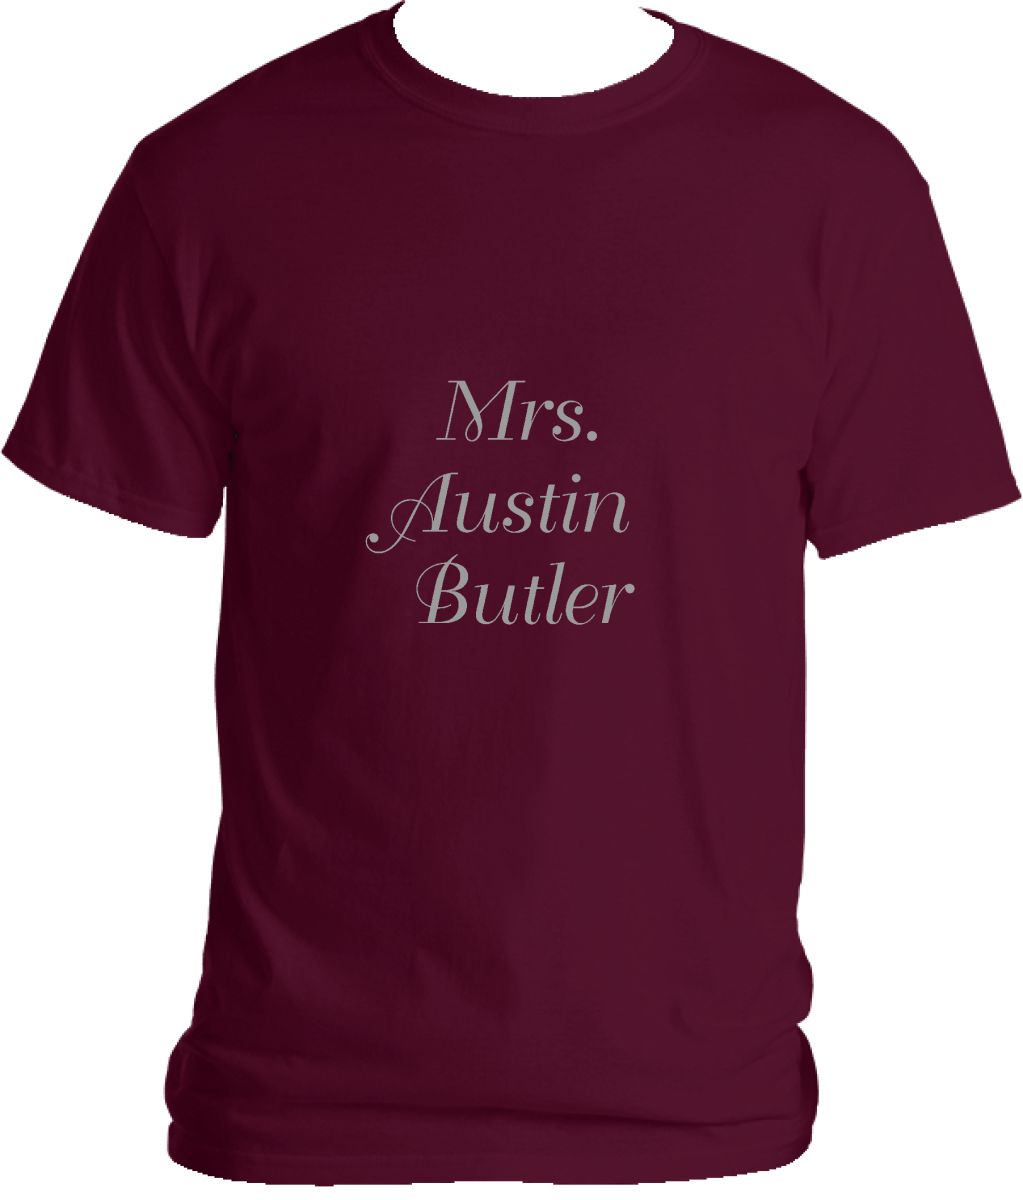 Mrs. Austin Butler Shirt Maroon